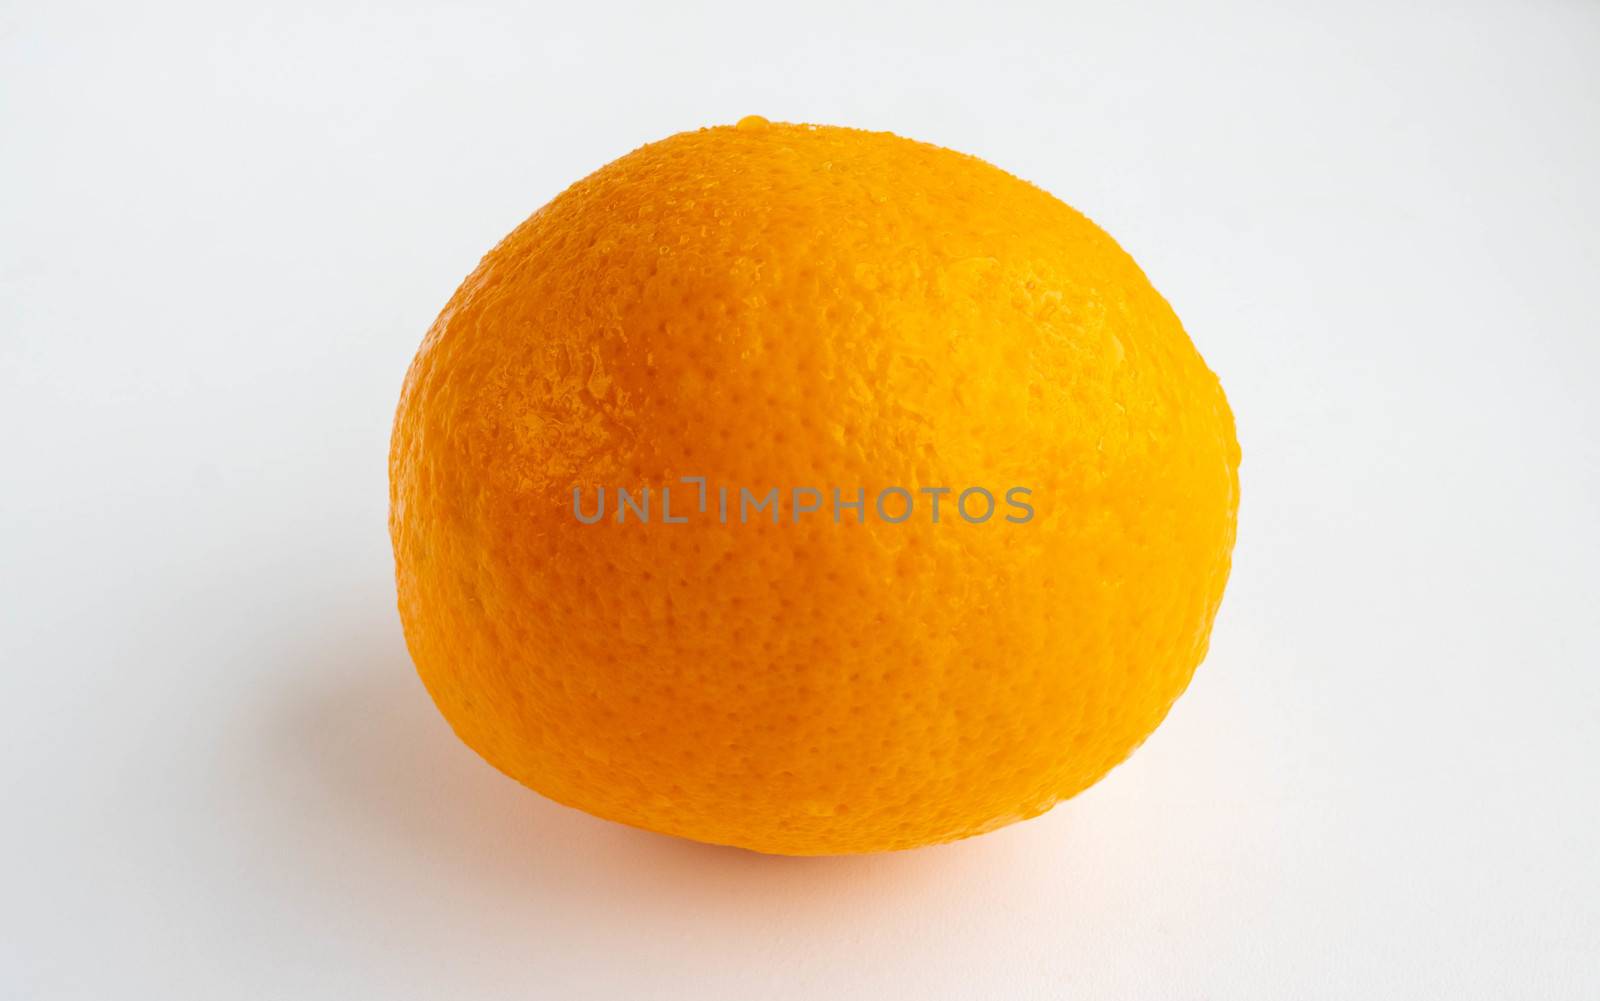 An orange lies on a white background. Harvest.